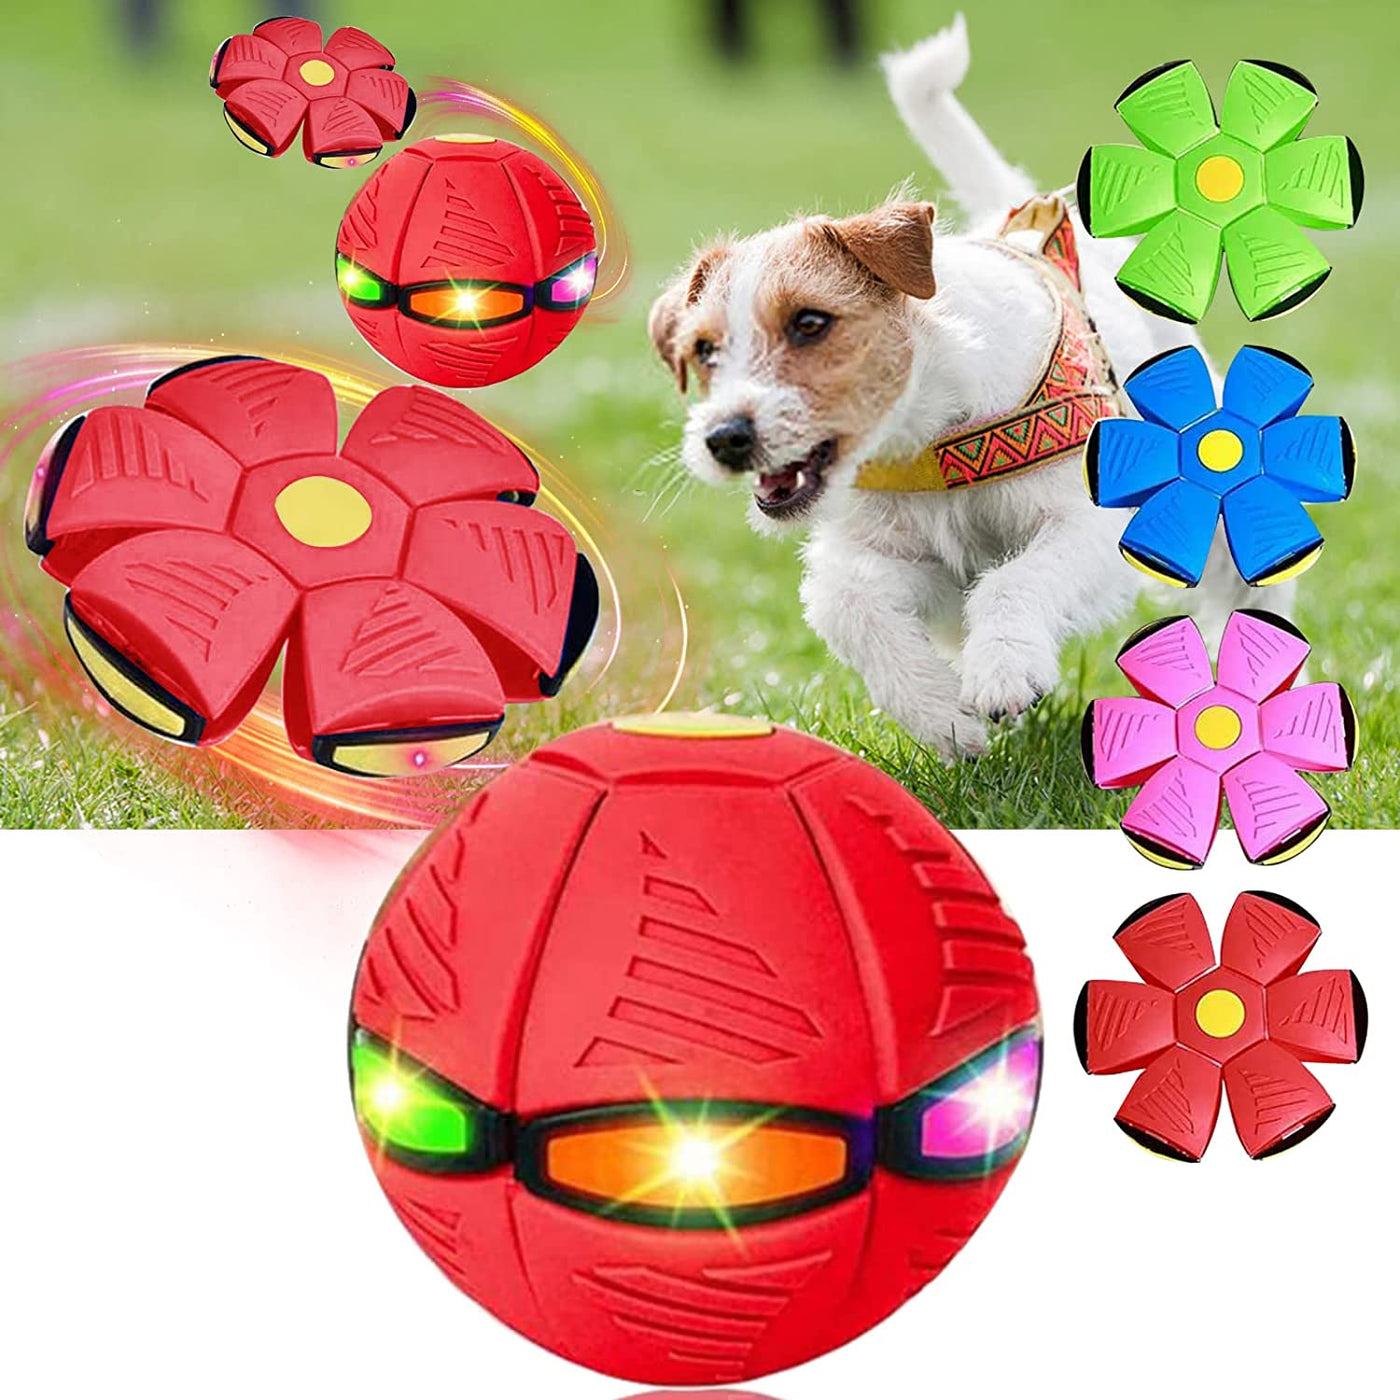 Dog Toy Magic Flying Saucer Ball